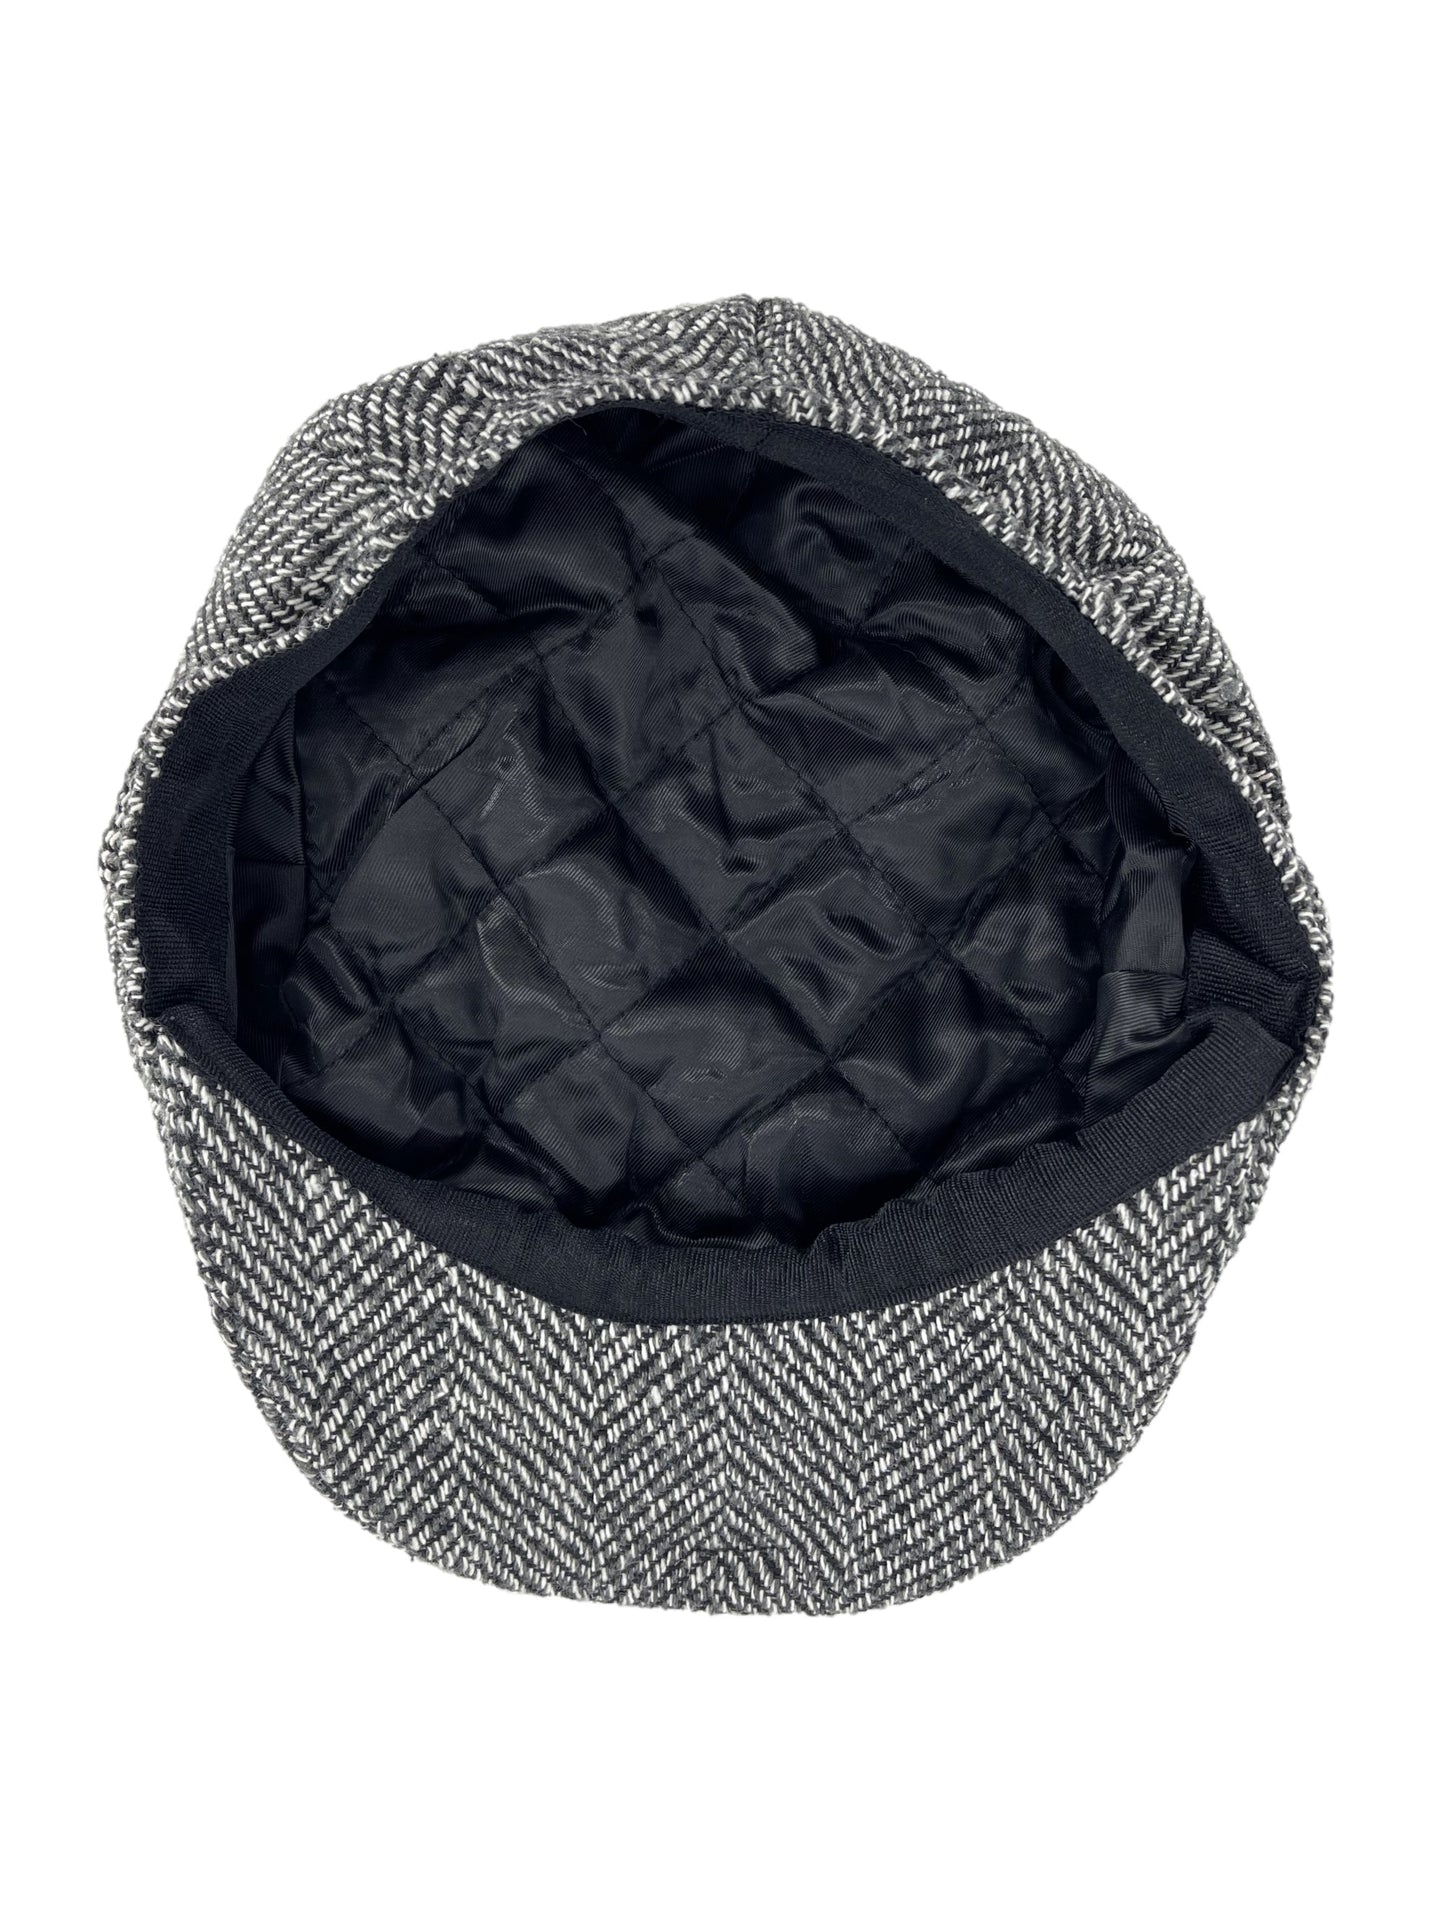 Mens Baker Boy Thermal Hat 8 Panel Thinsulate Lined Grey Herringbone Wool Blend Cap